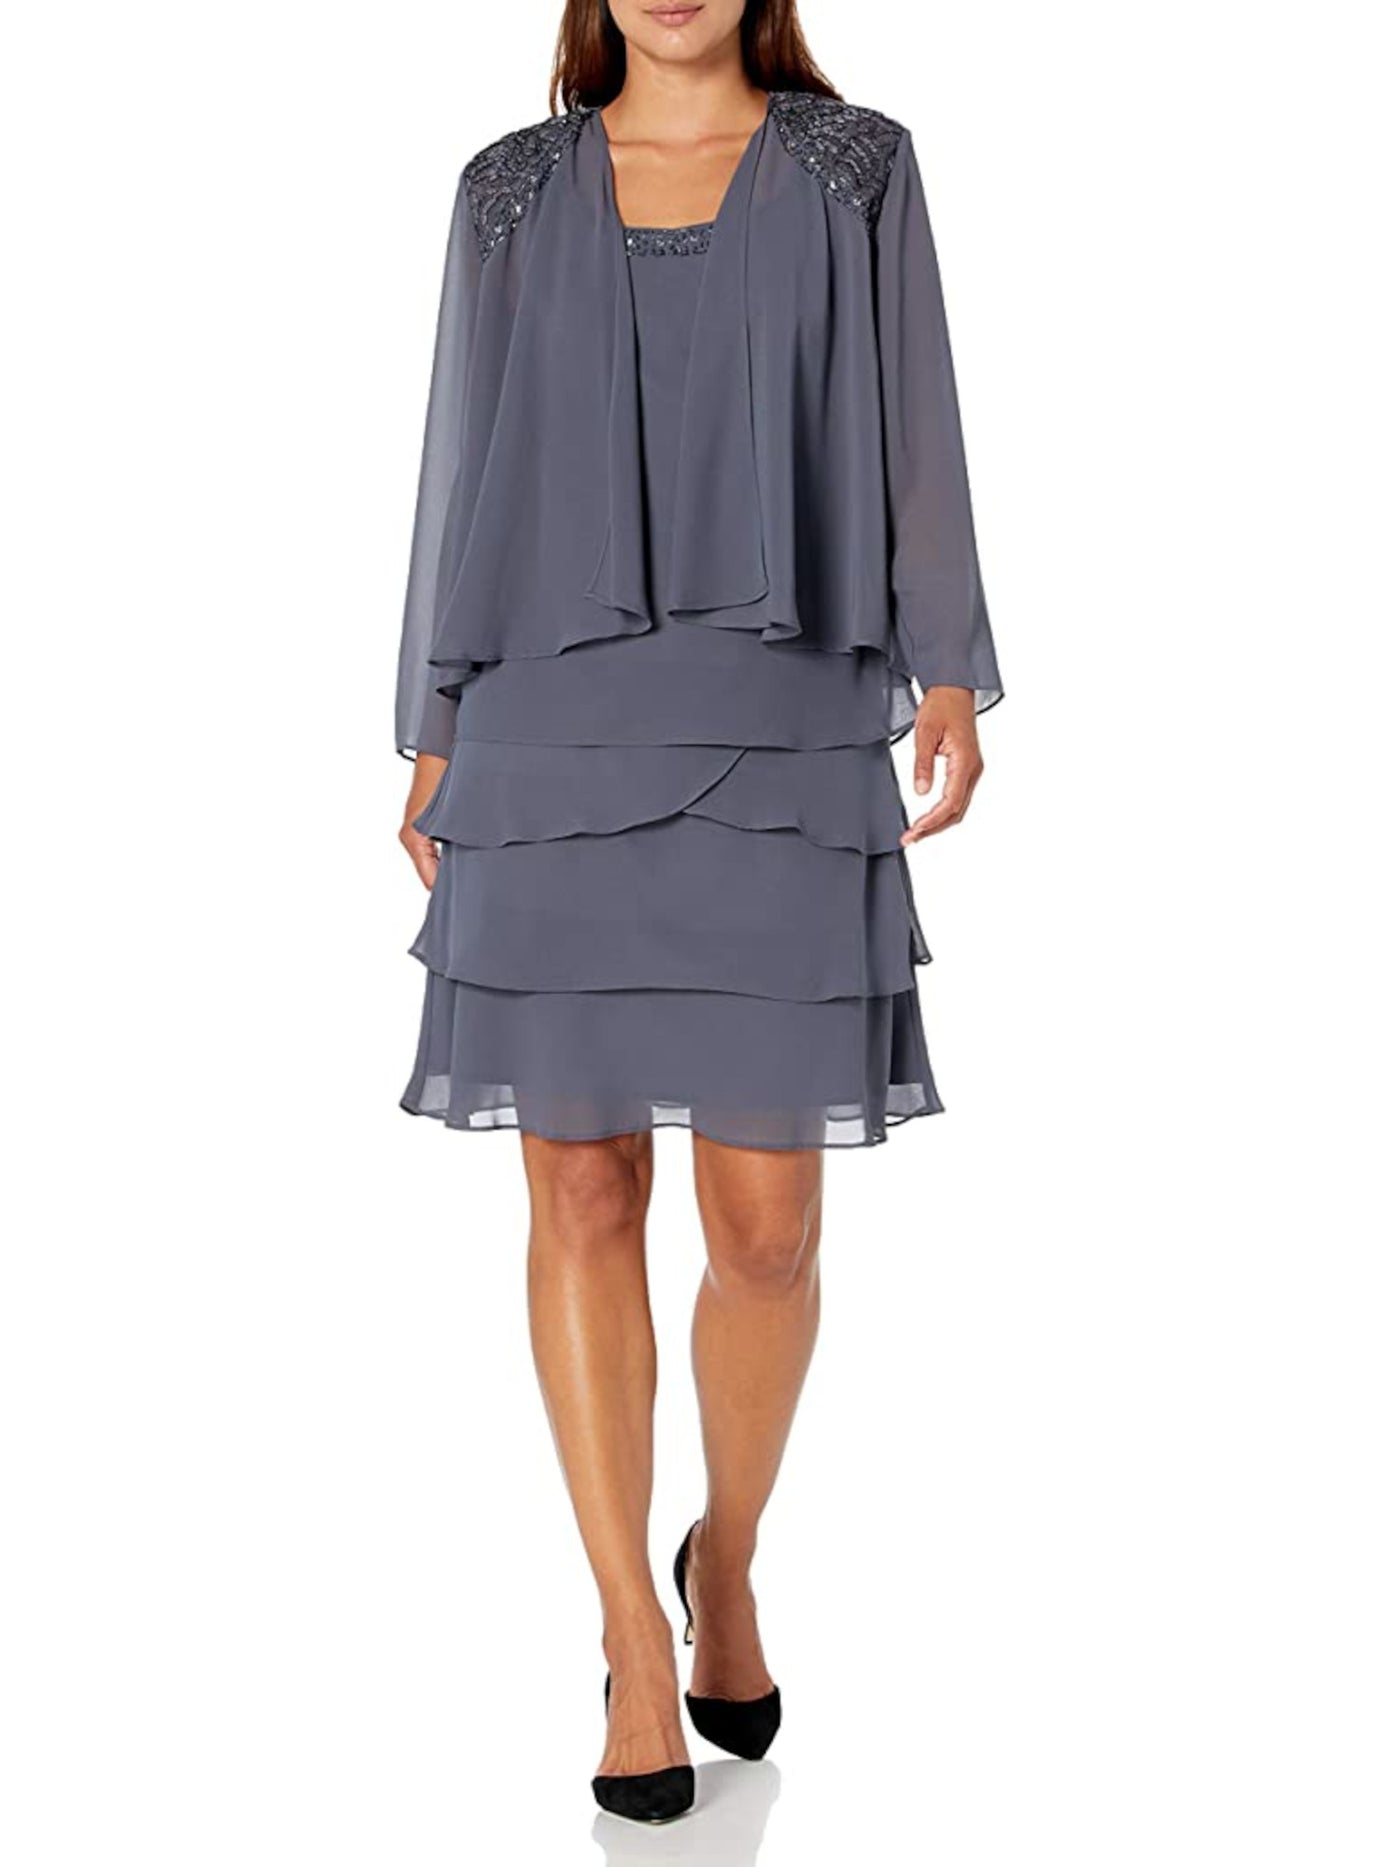 SLNY Womens Gray Sheer Open Front Embellished Padded Shoulders Long Sleeve Wear To Work Jacket 10